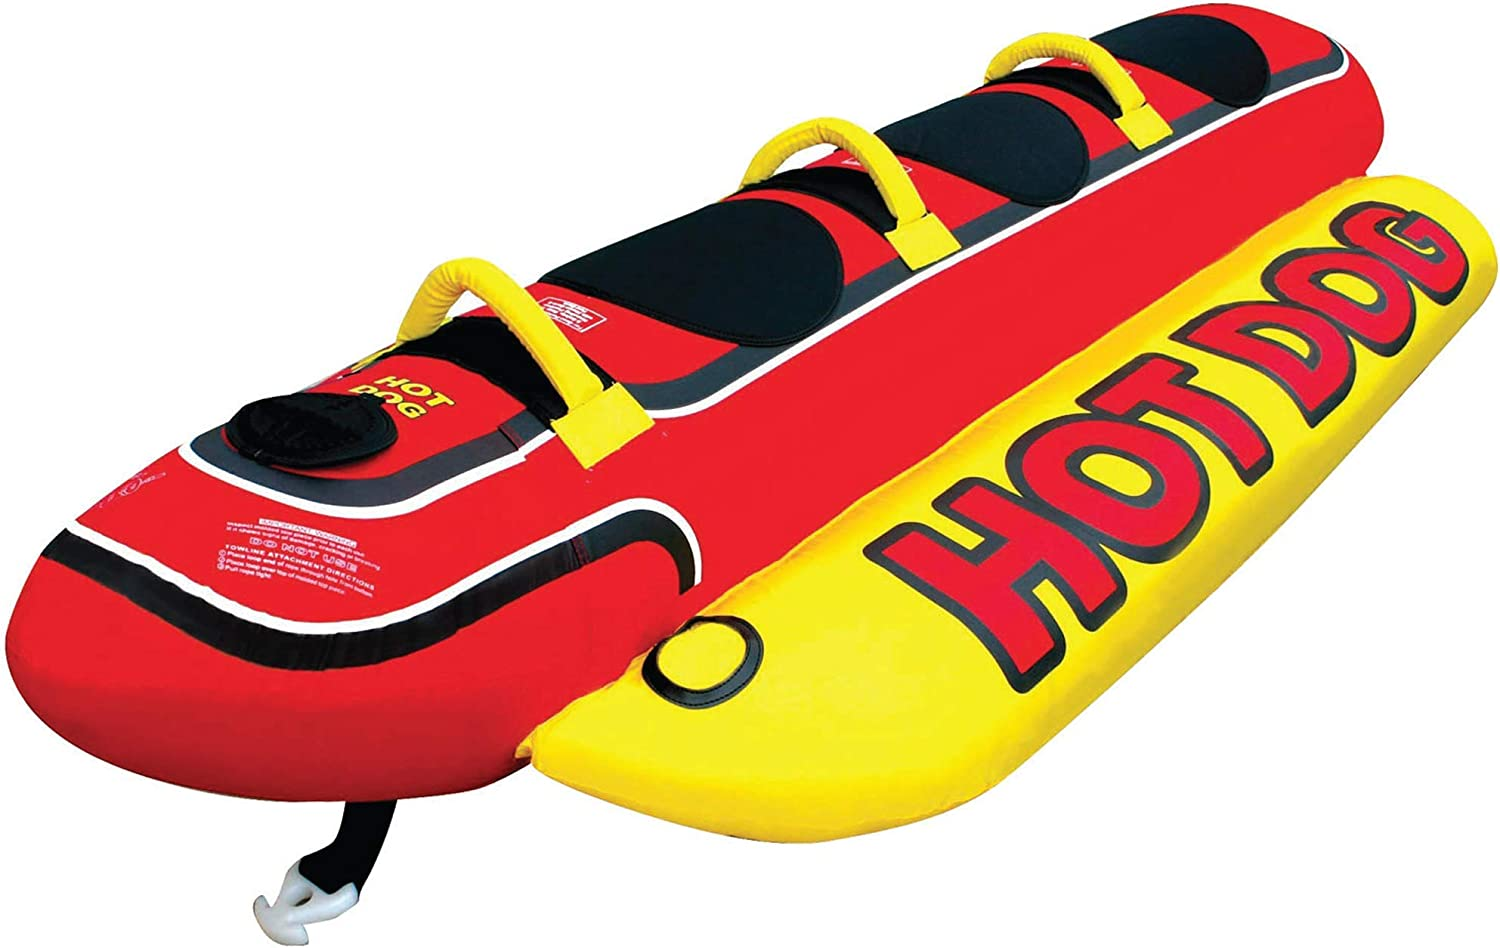 Kwik Tek Hot Dog Towable Inflatable Boat Lake Tube, 3 Person